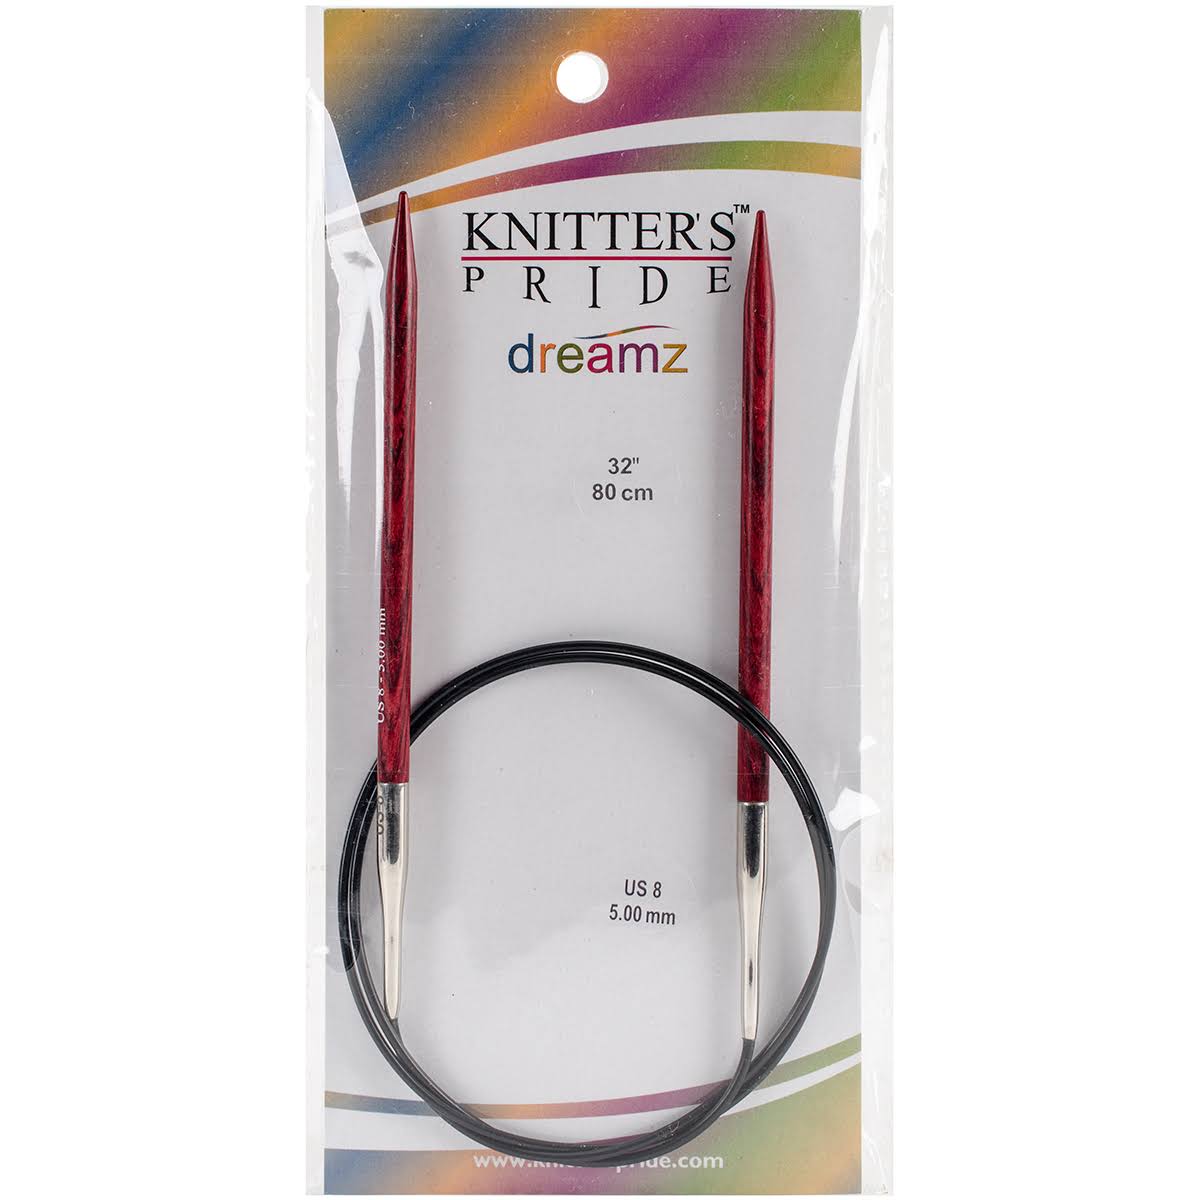 Knitters Pride Dreamz Circular Knitting Needles - Size 8, 32"